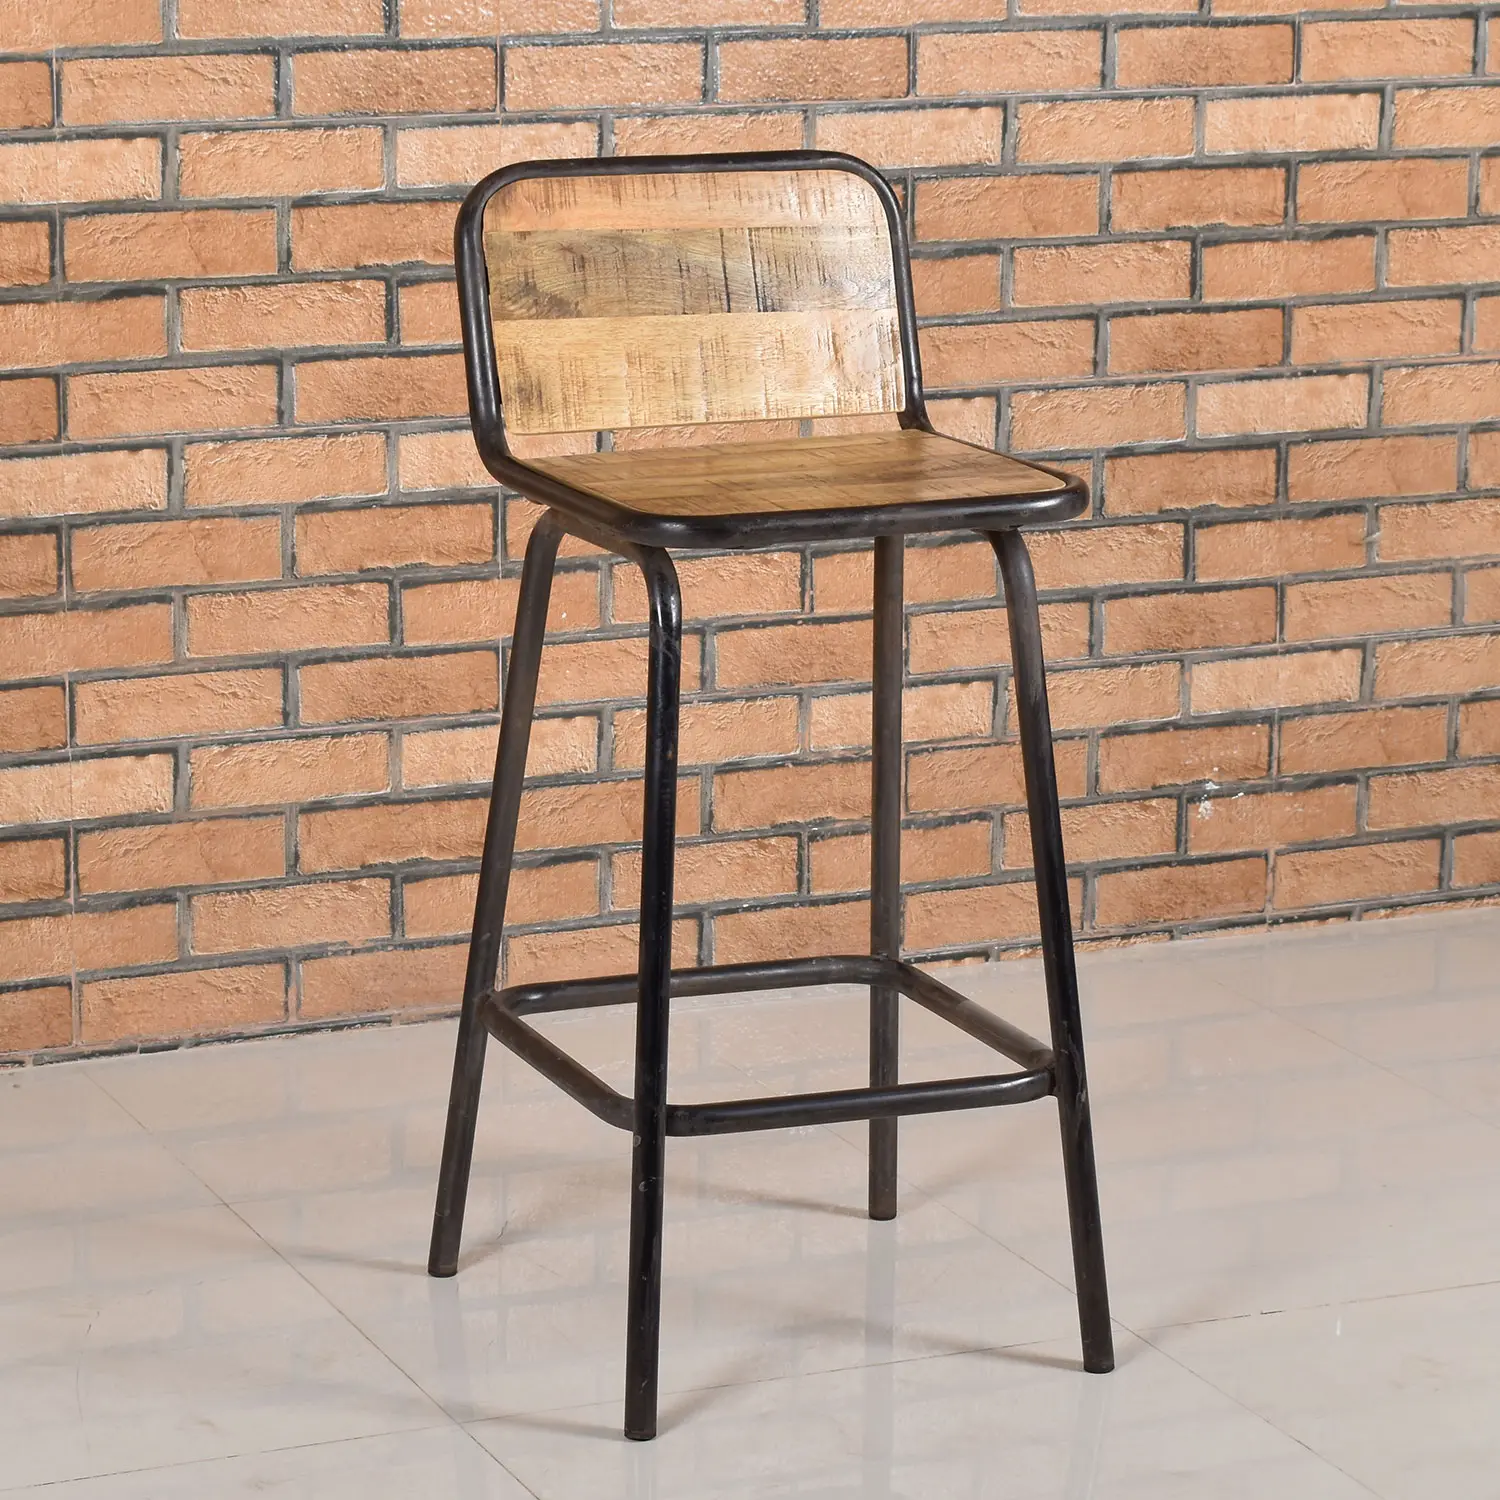 Iron Bar Stool with Wooden Seat - popular handicrafts